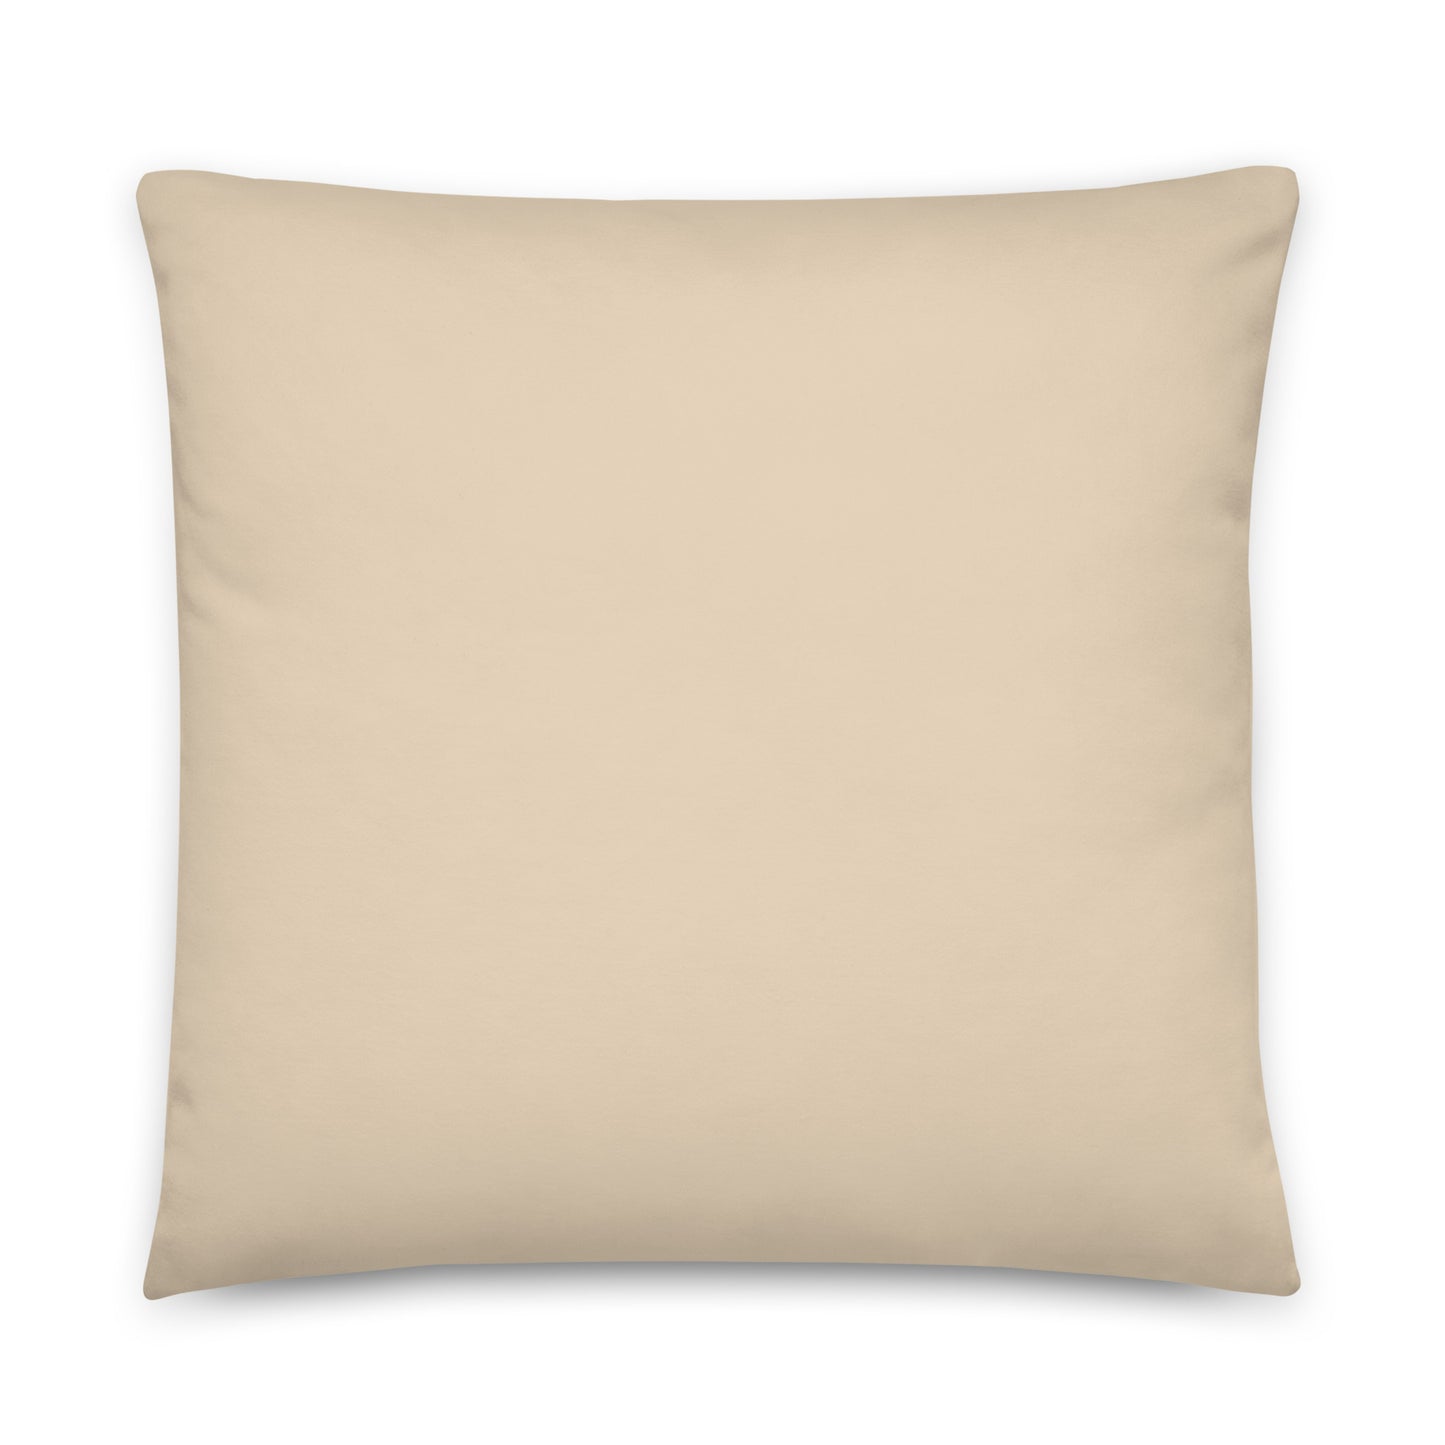 Basic Cream - Sustainably Made Pillows